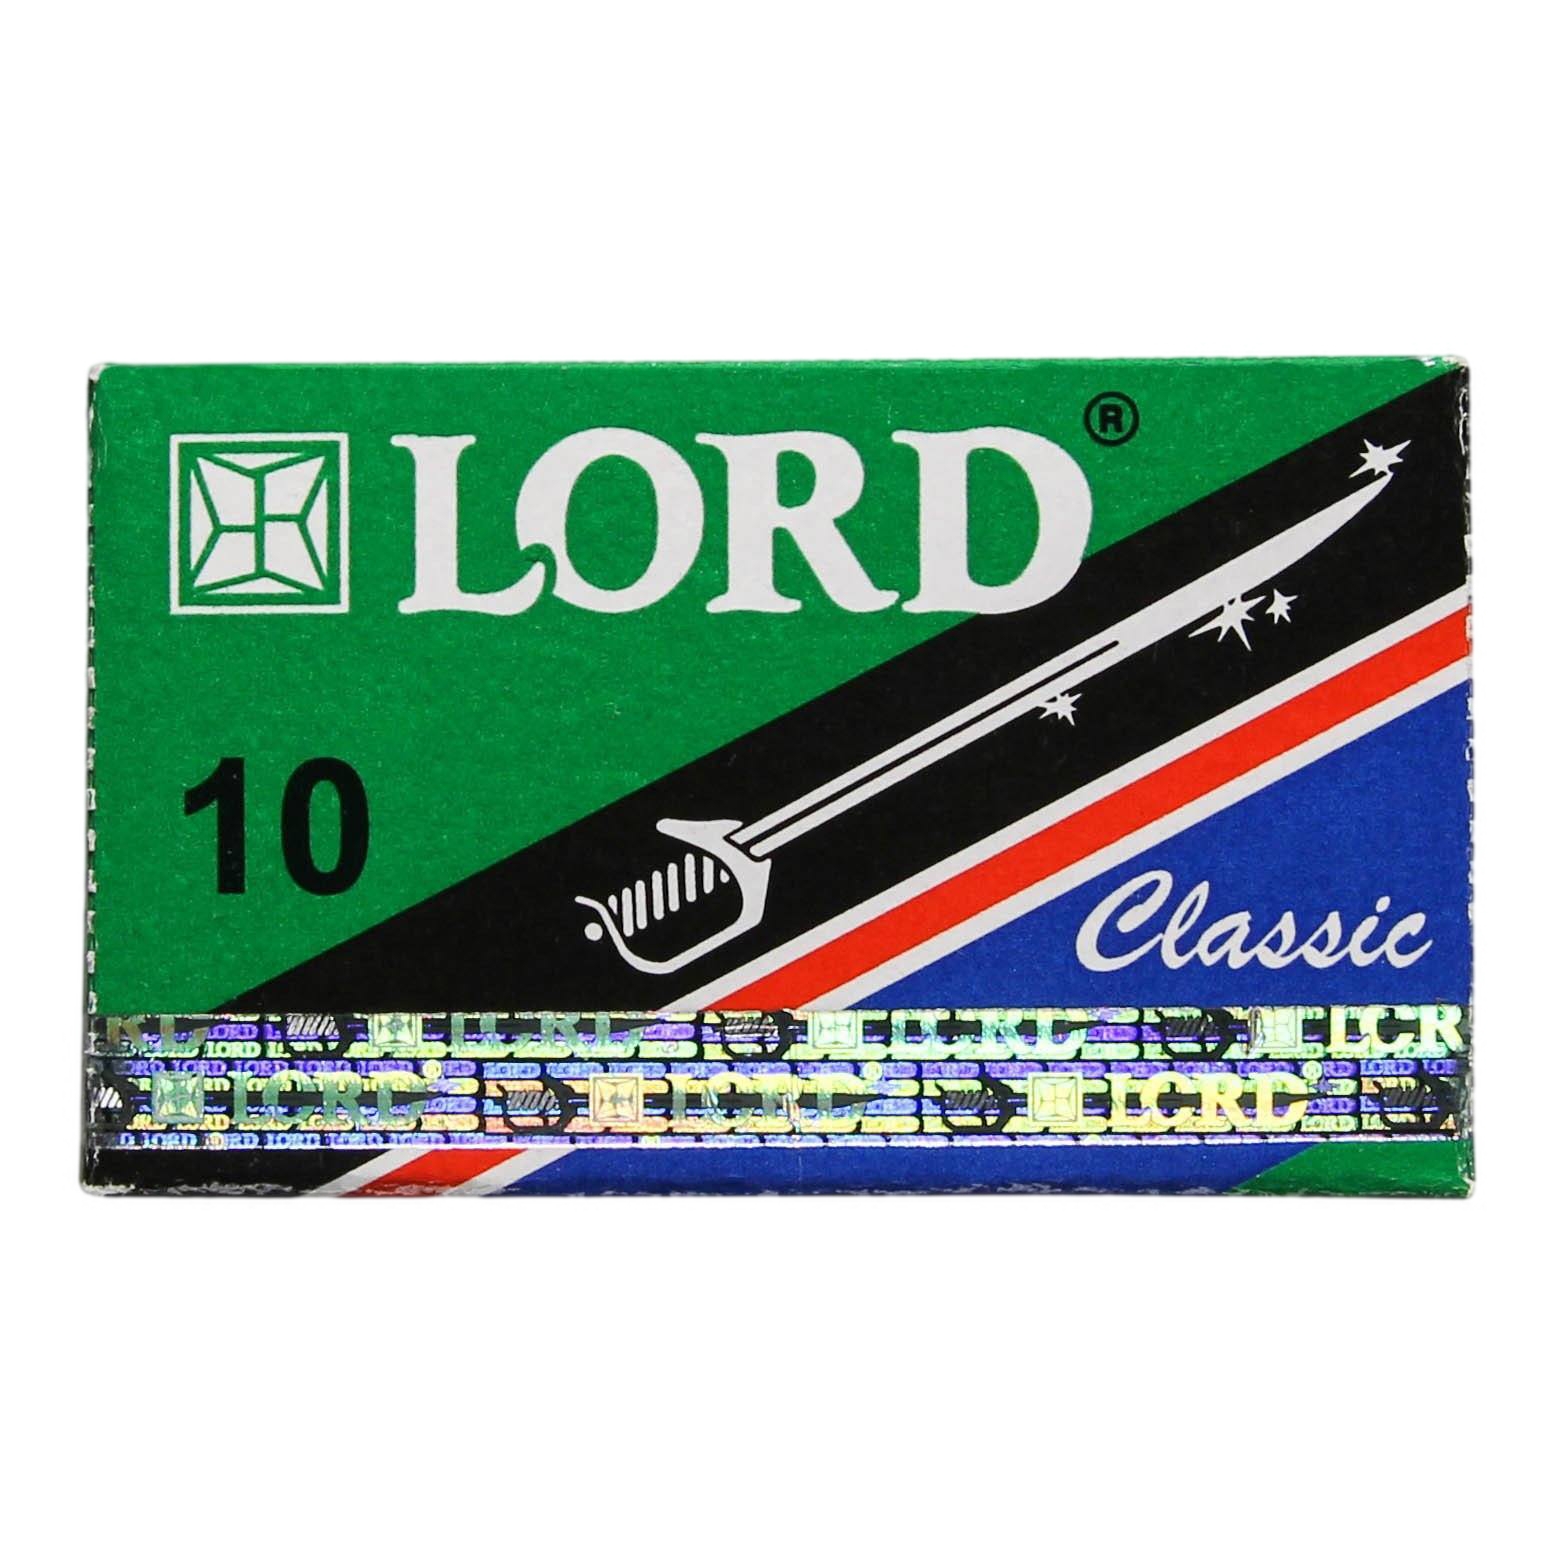 Lord Classic Super Stainless tradisjonelle barberblader - 10-pakning